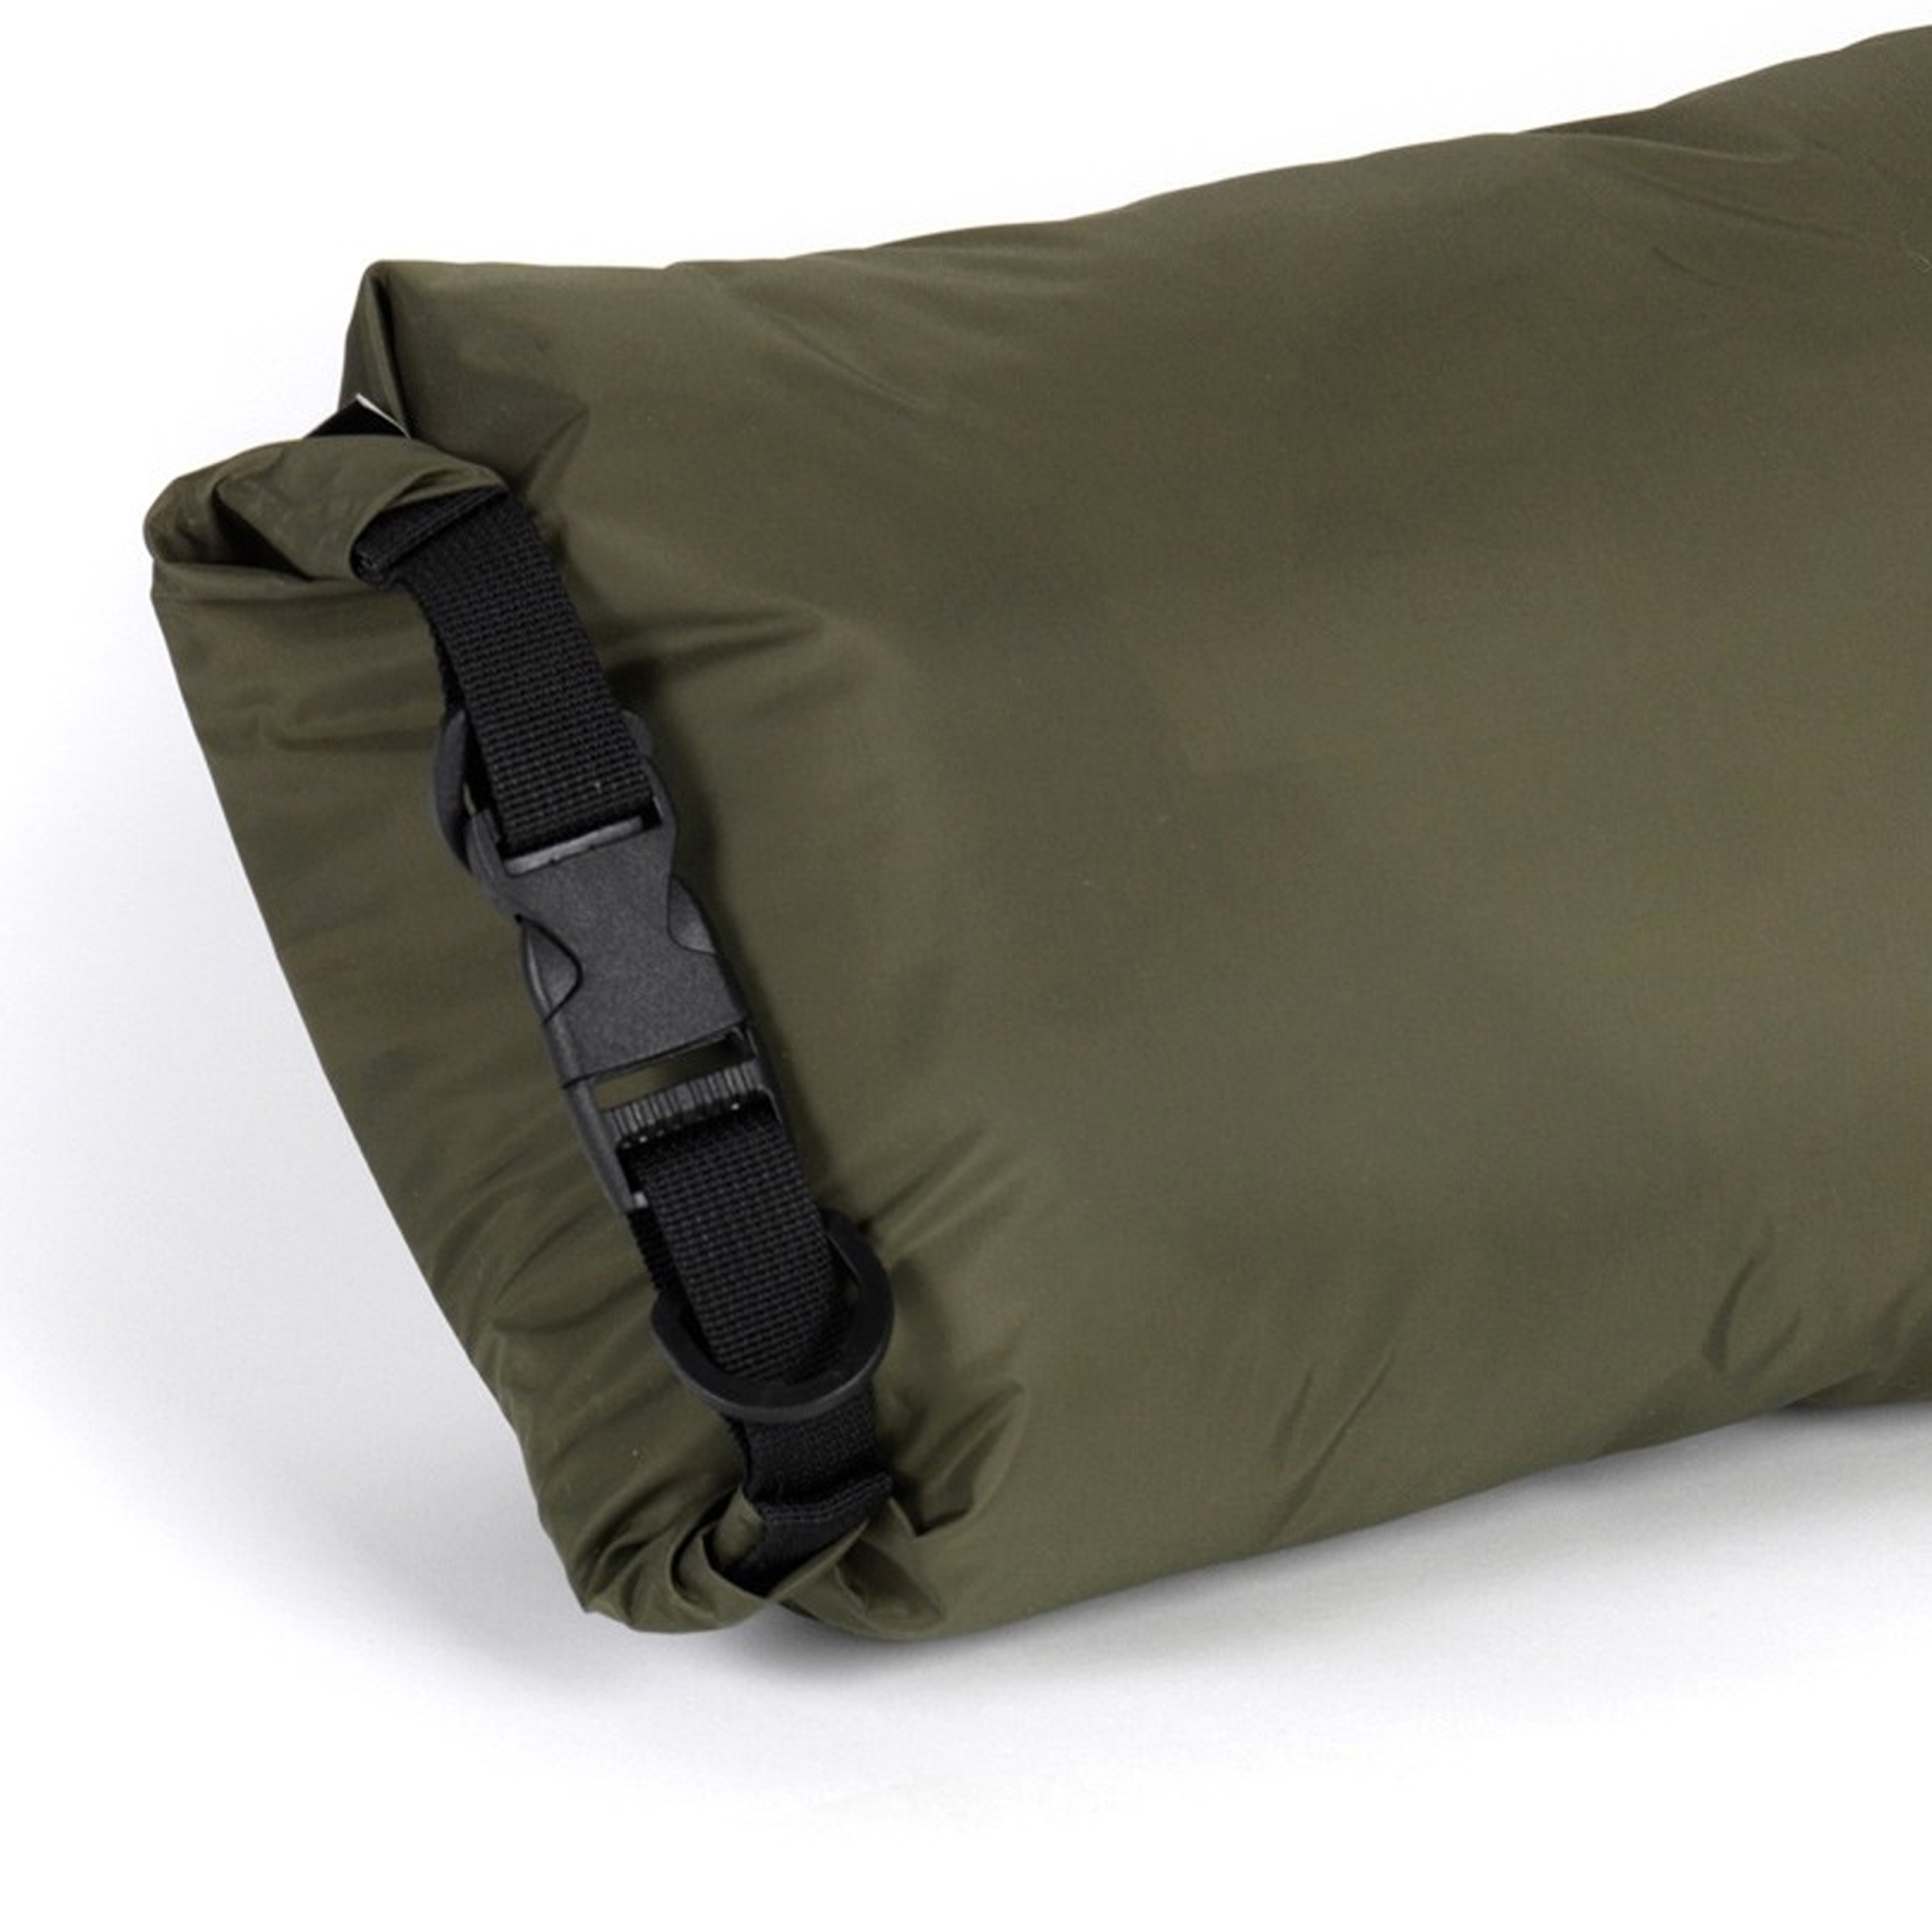 Proforce Equipment Sleeping Bag Compression Sacks - image 3 of 6